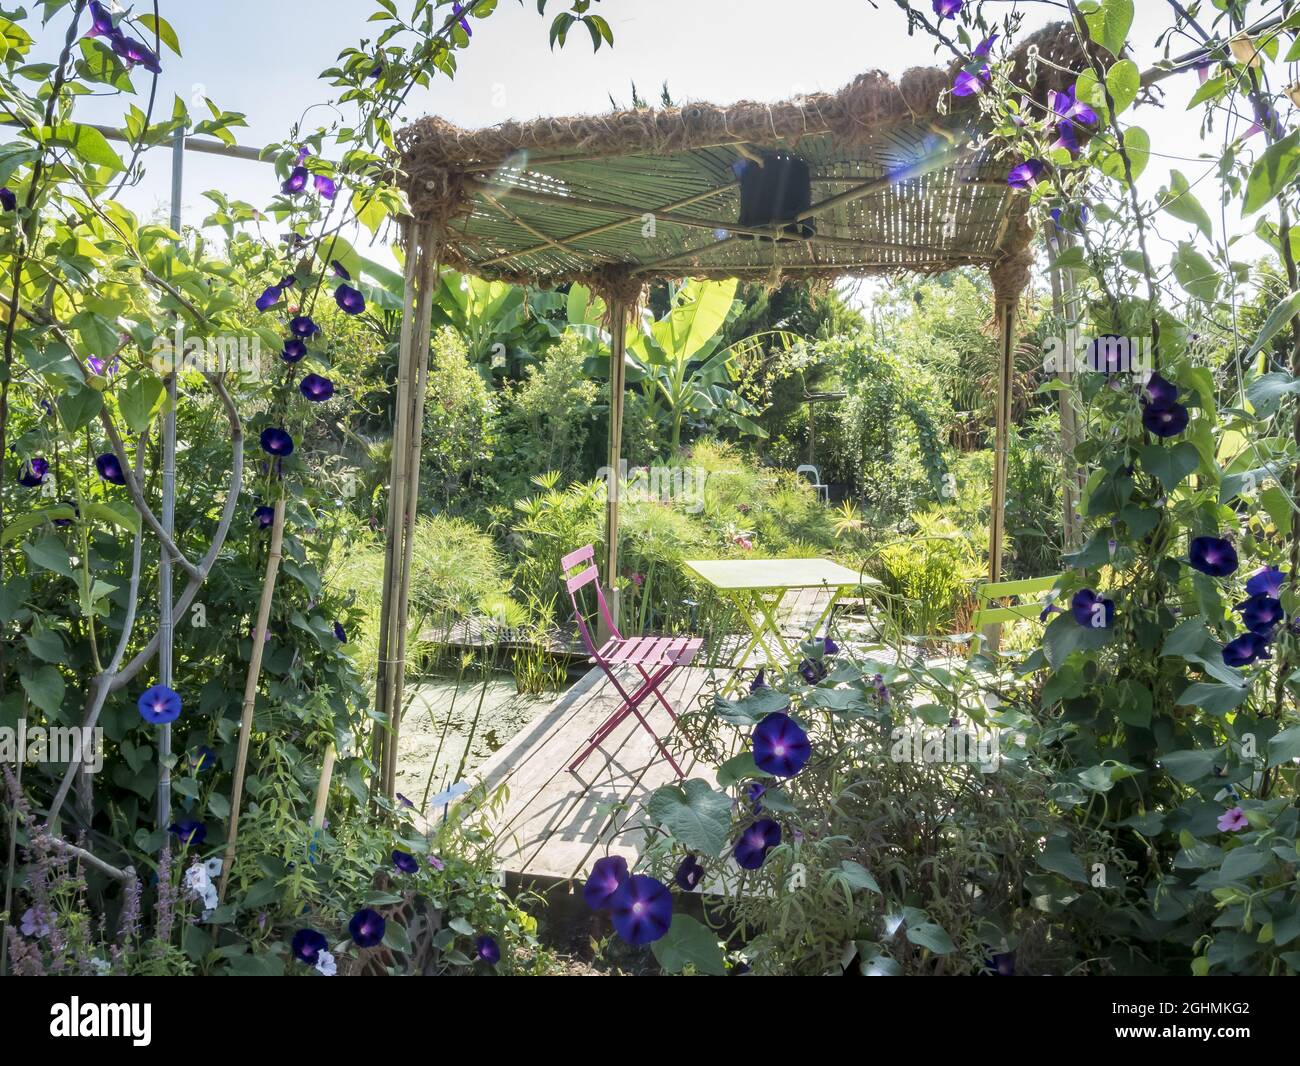 Ipomoea purpurea 'Grand' Pa Ott', Jardin de l'Ecole du Breuil, Paris, France. 2018-07-21 Stock Photo